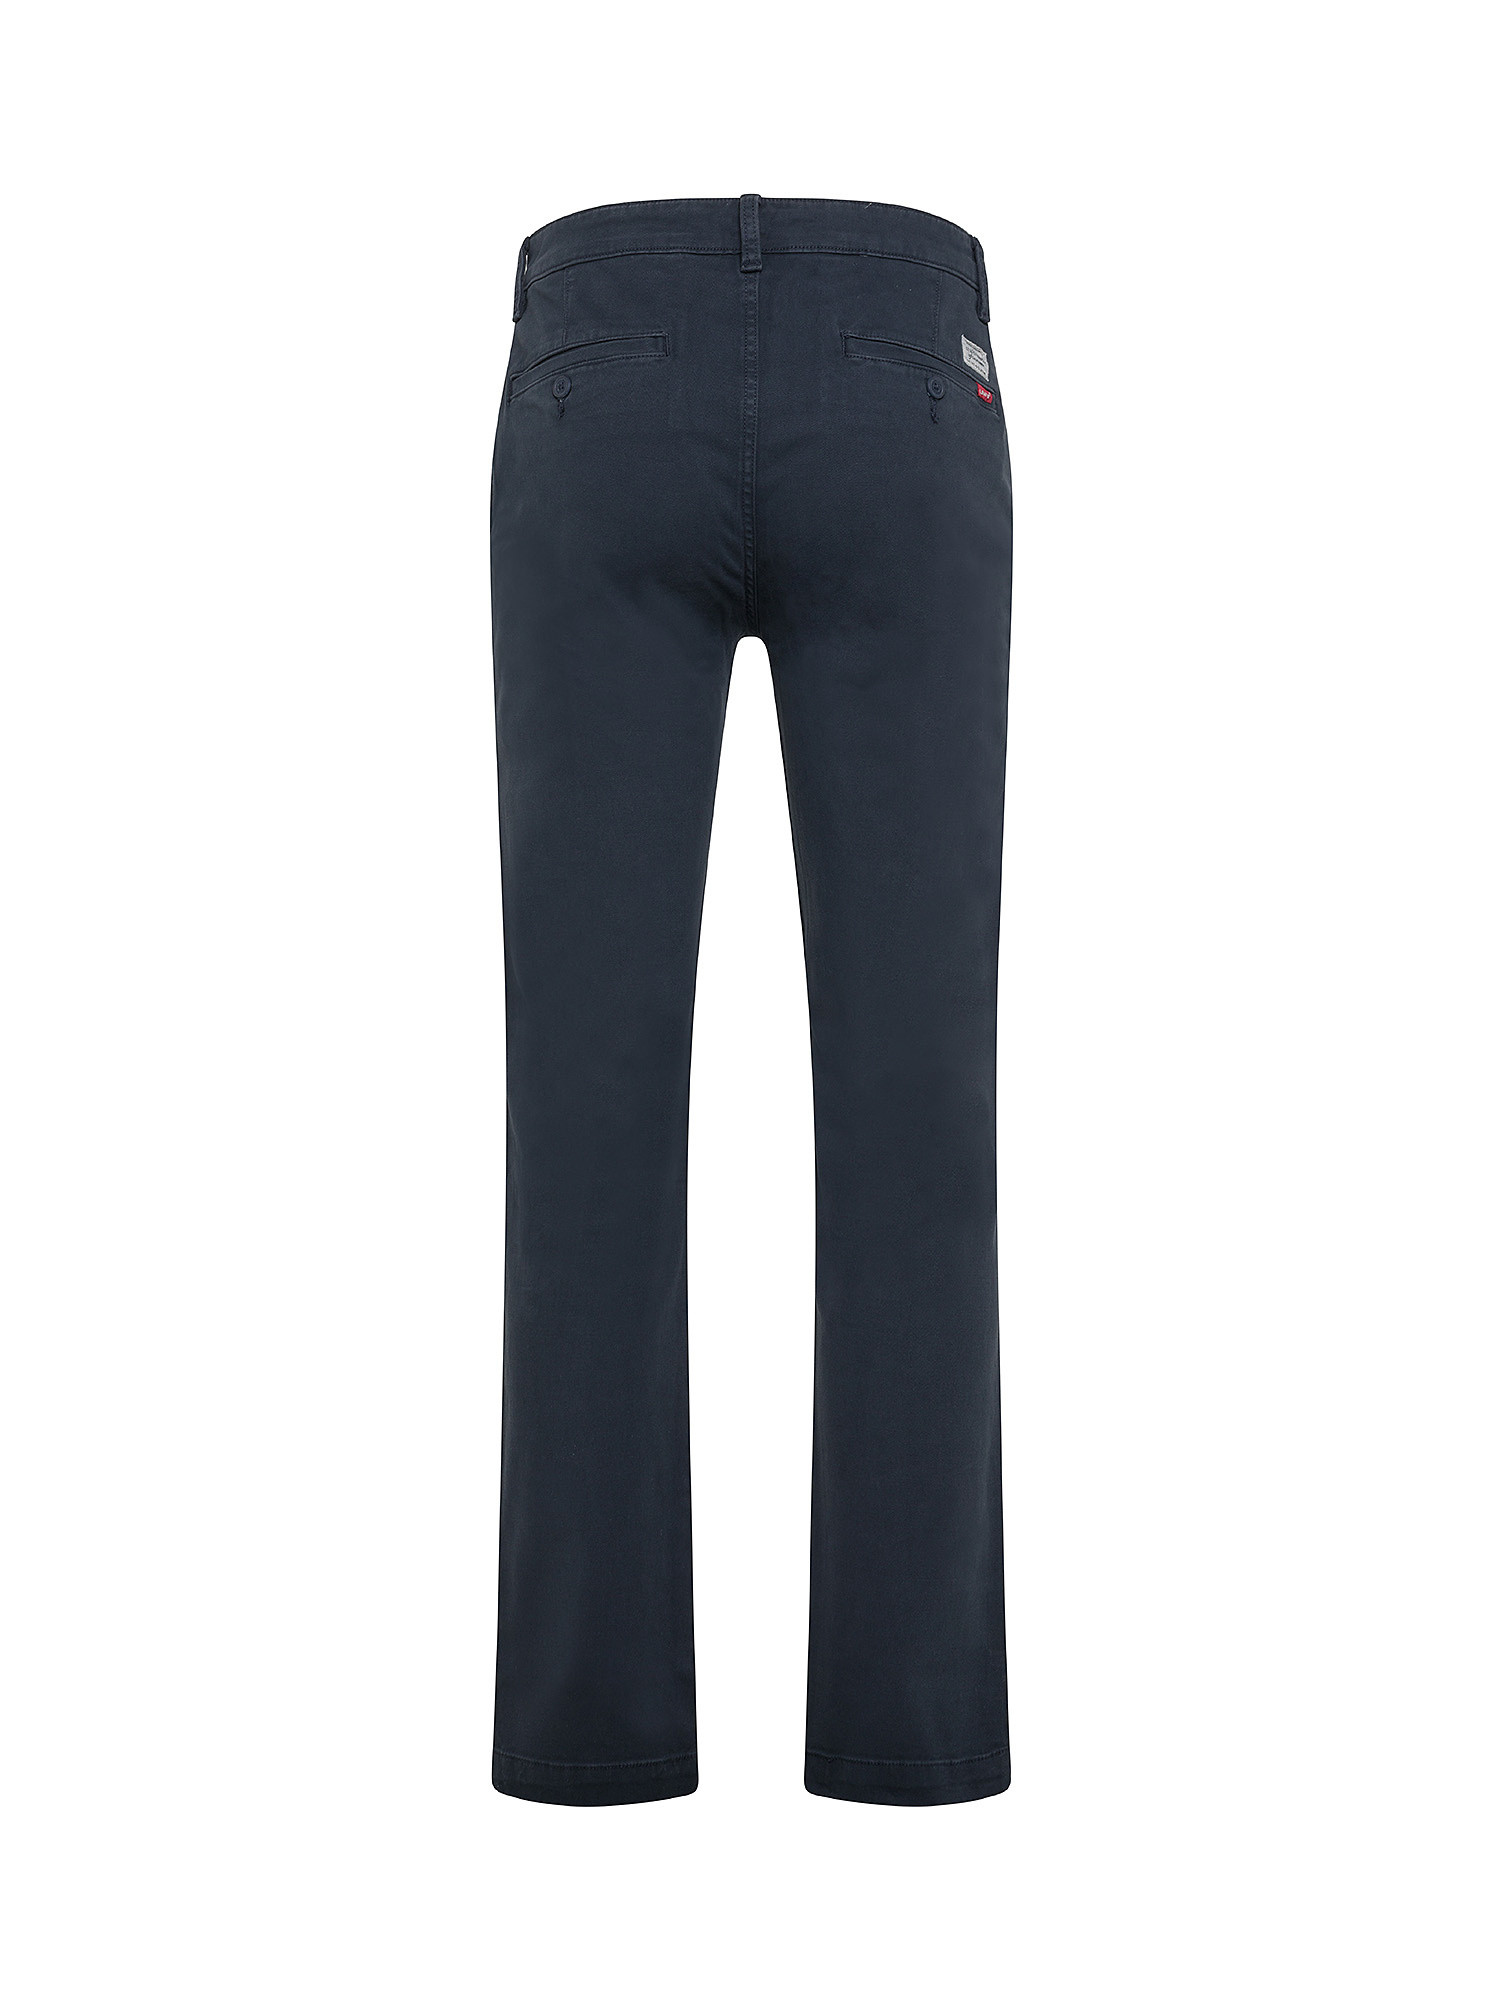 Levi's - Pantaloni chino slim fit, Blu scuro, large image number 1